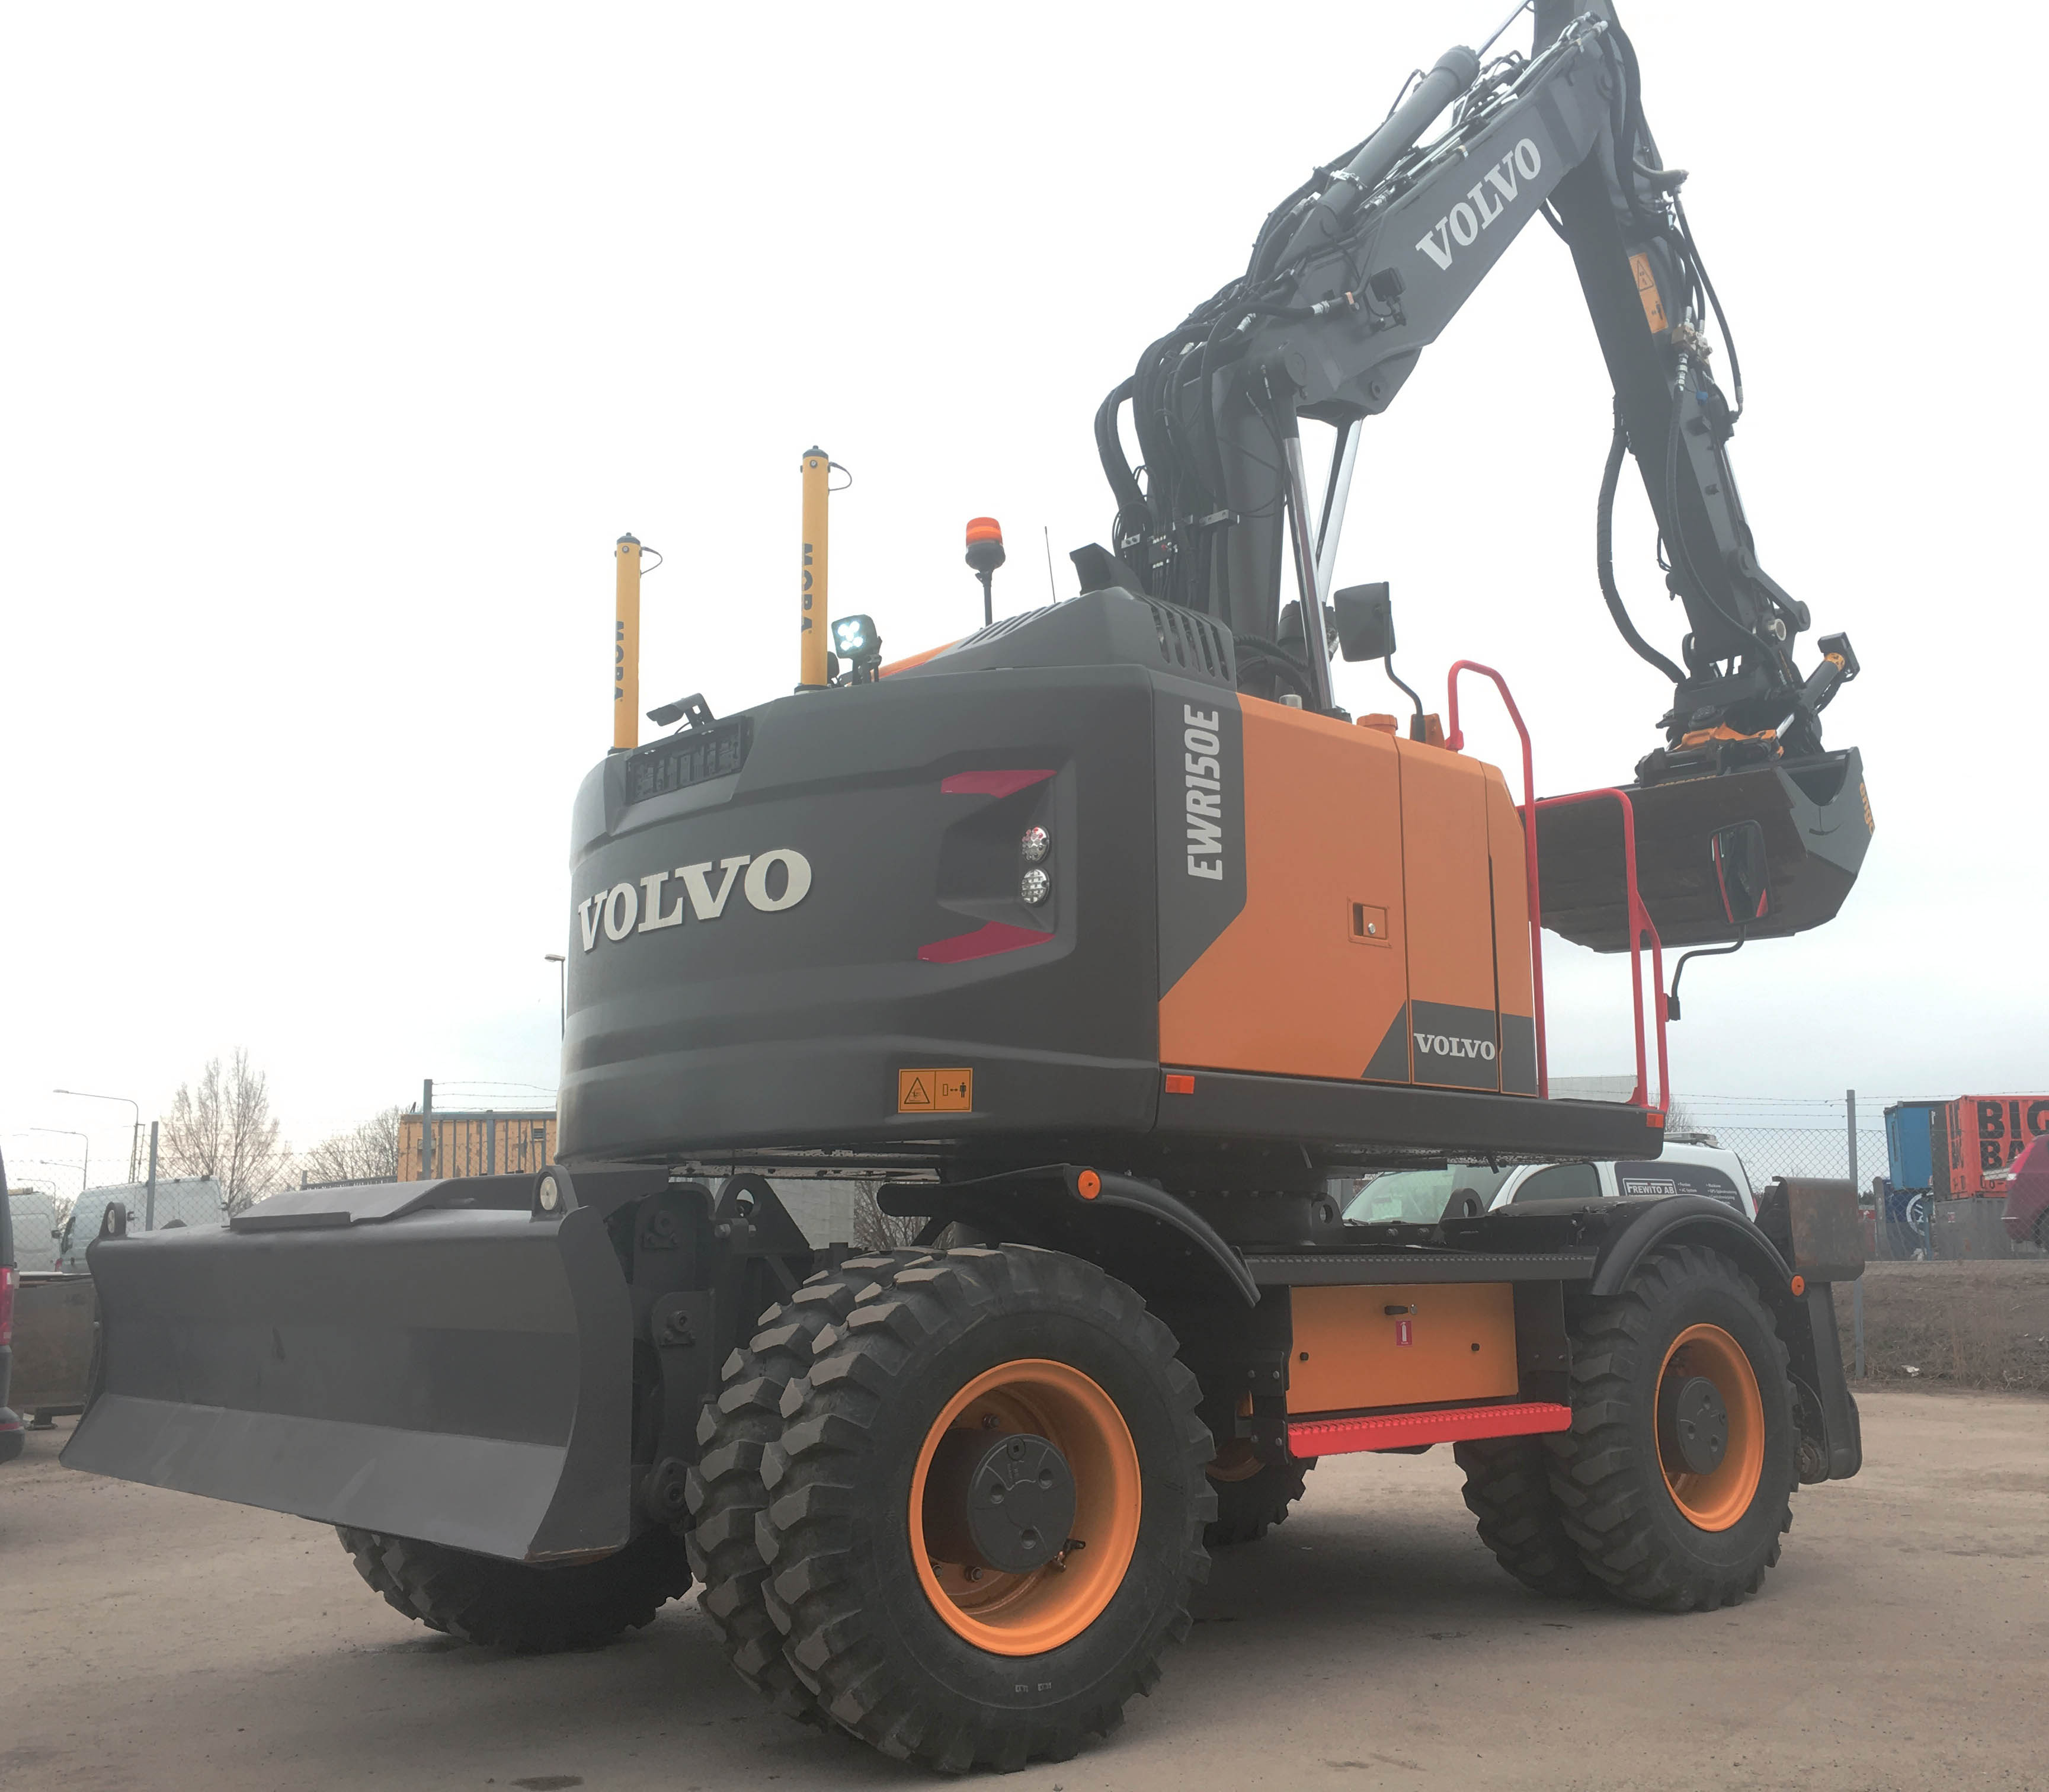 Vi hyr bland annat ut Volvo grävmaskin i Skåne